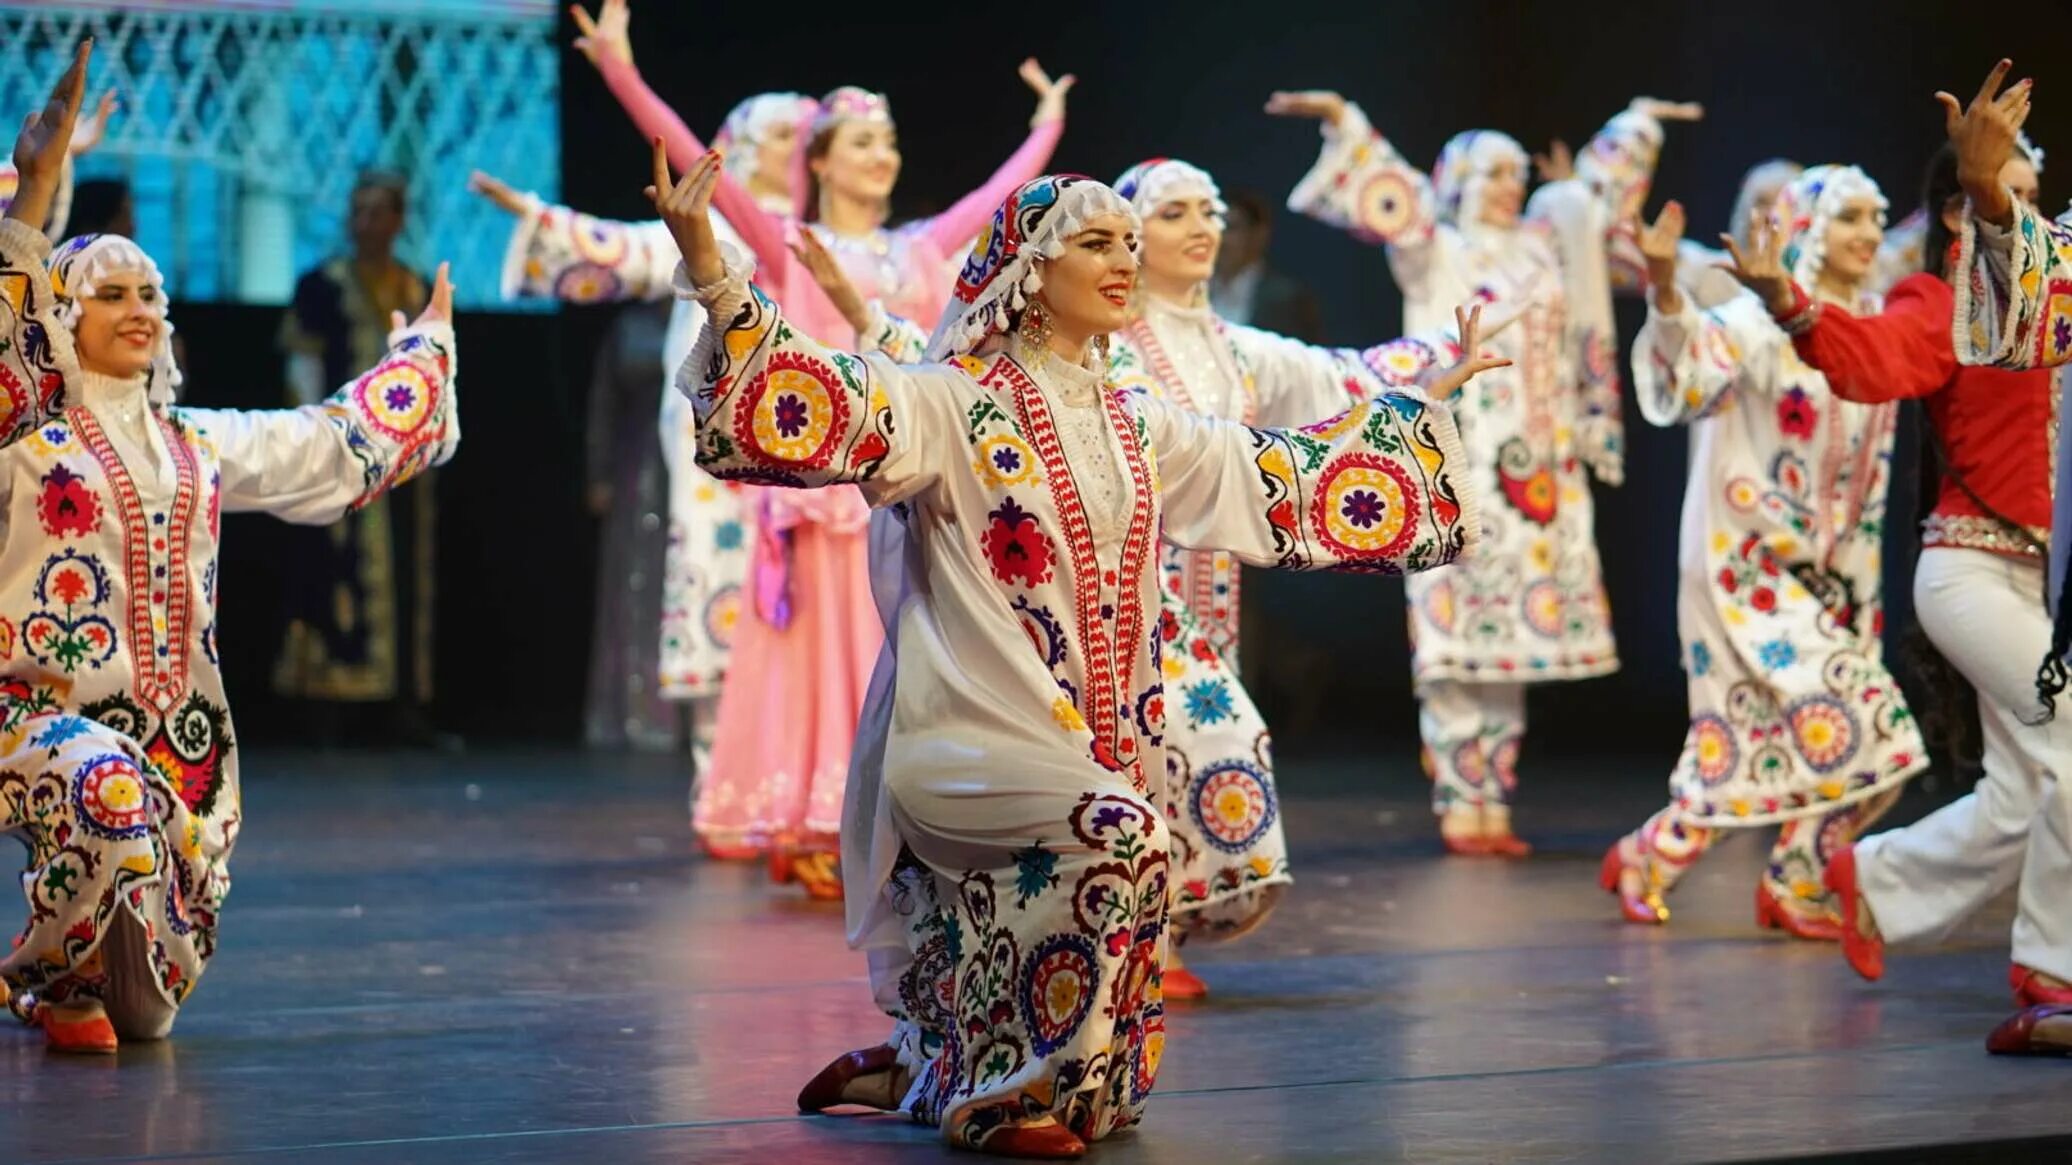 Танцующий таджик. Ансамбль Гулрез Таджикистан. Культура Таджикистана. Национальный ансамбль Таджикистана. Национальные танцы Таджикистана.